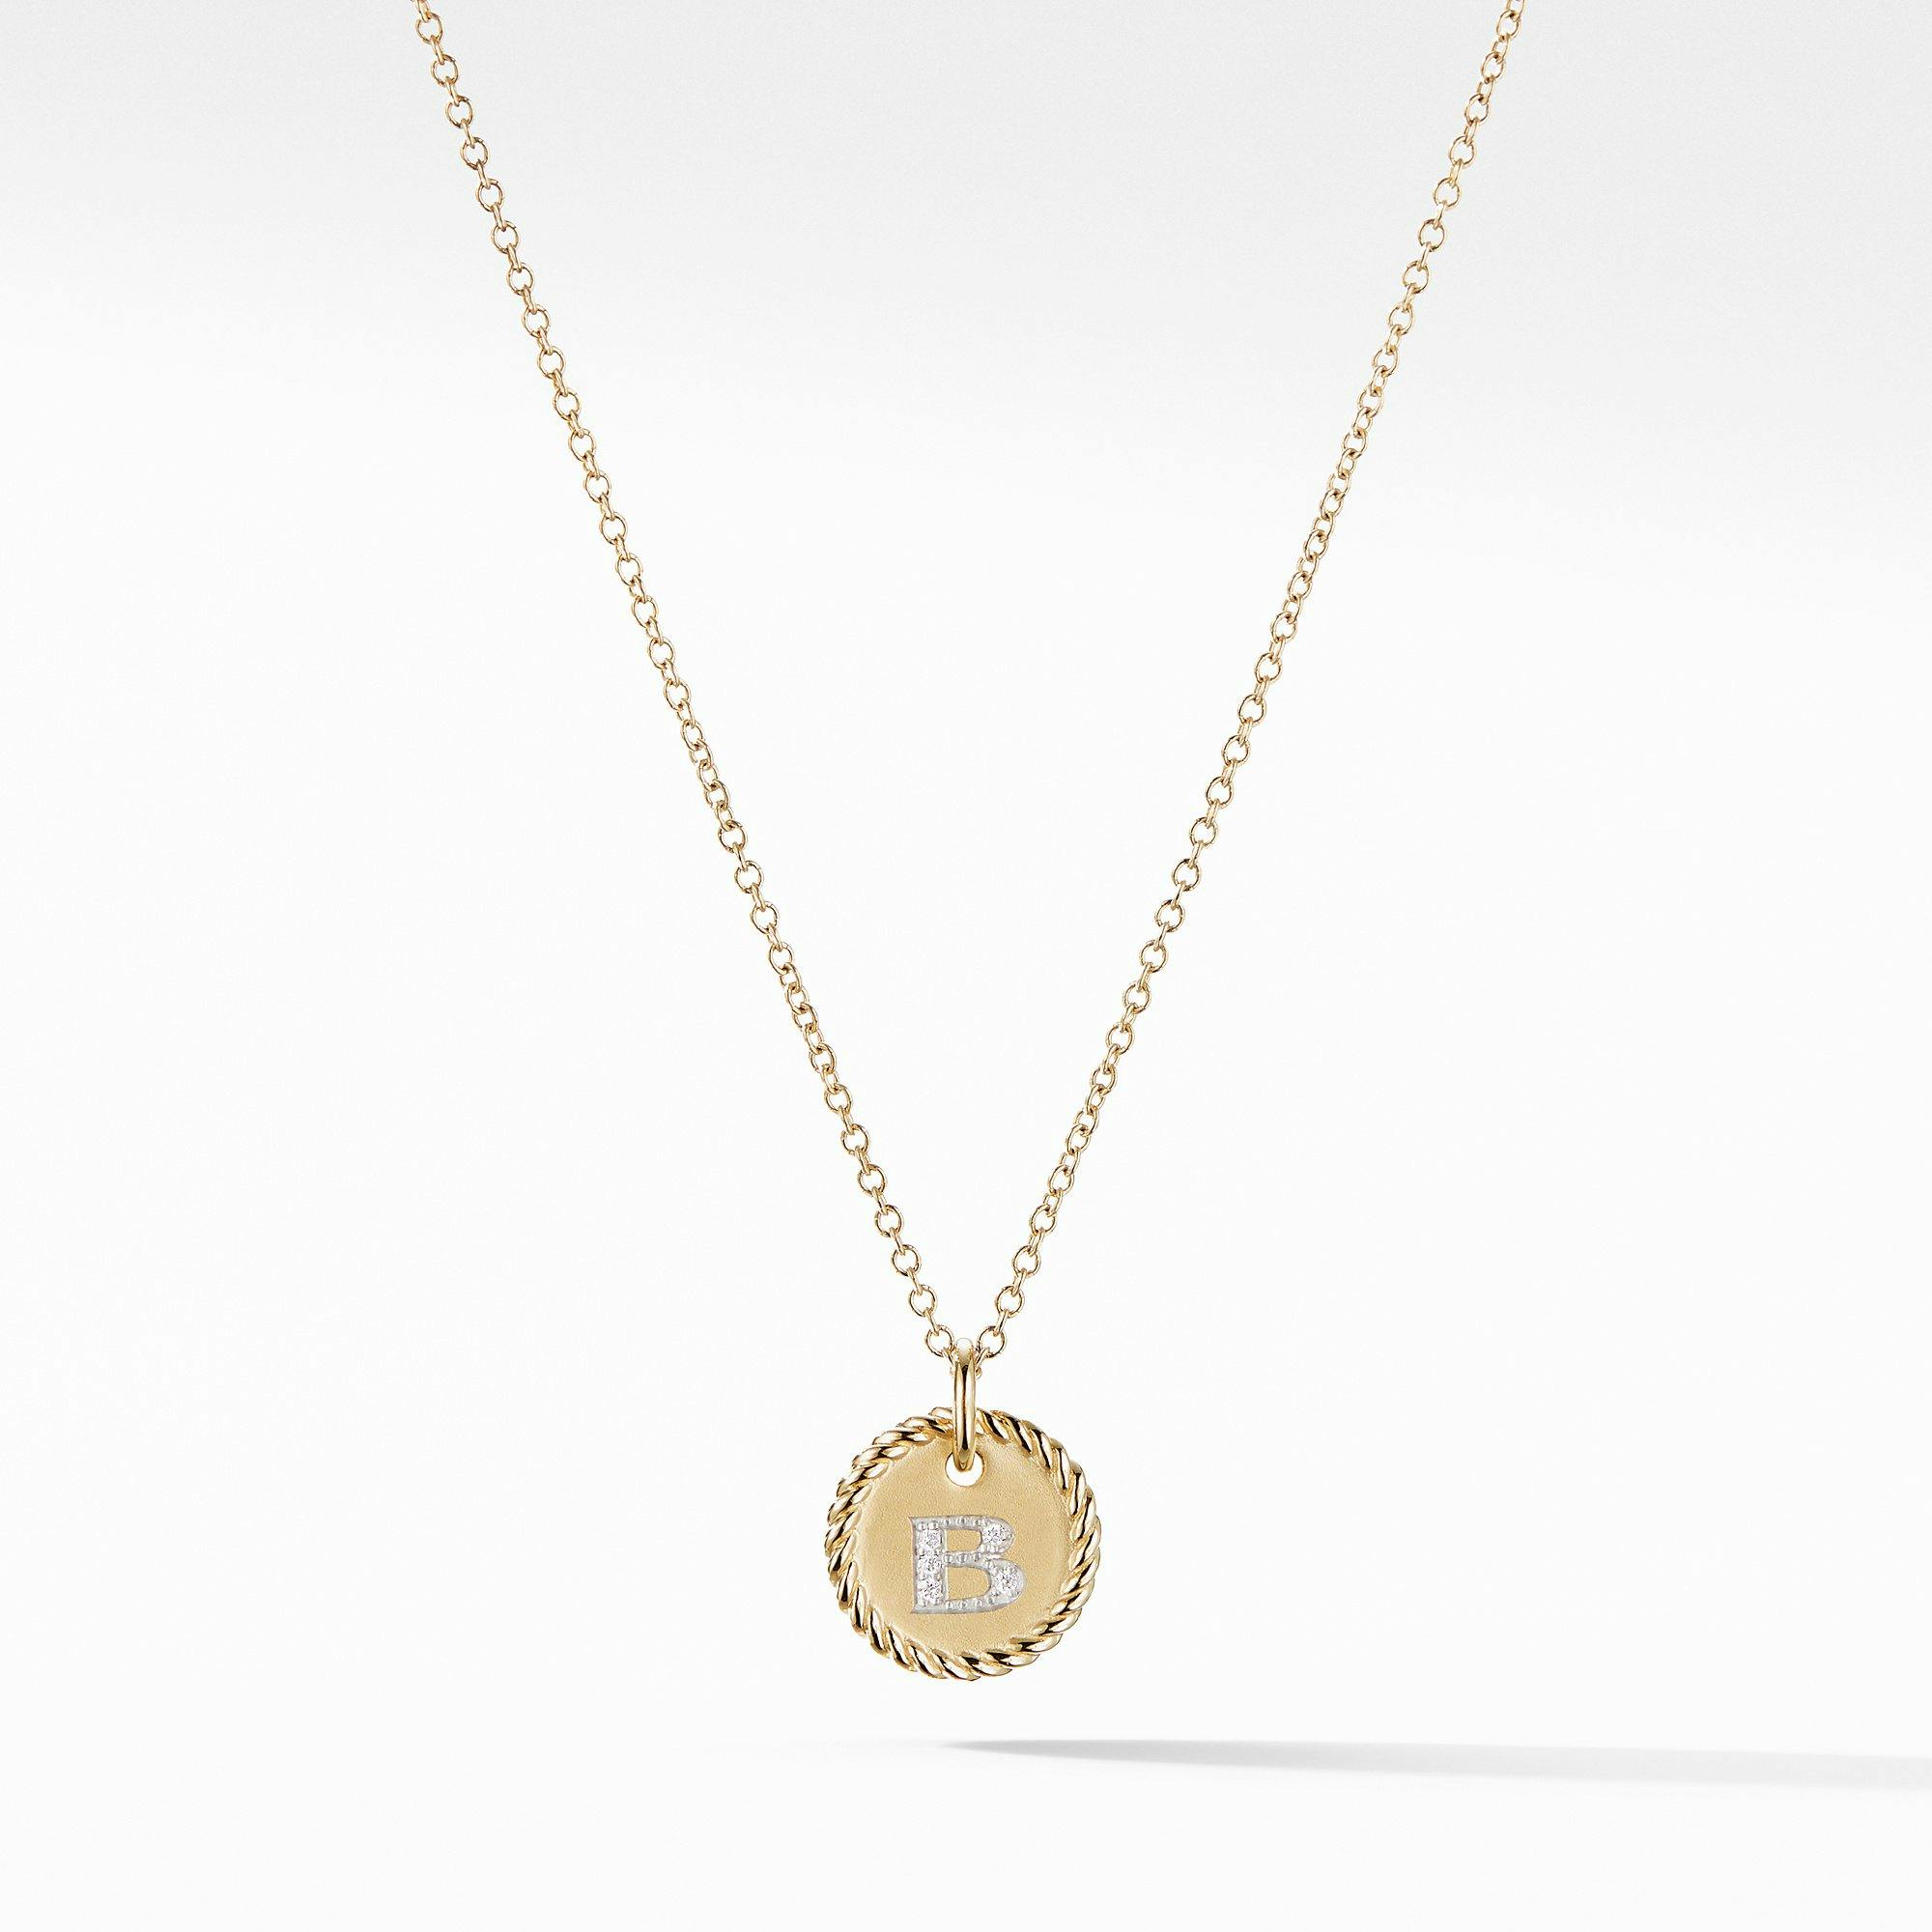 David Yurman "B" Initial Charm Necklace in 18k Yellow Gold with Diamonds